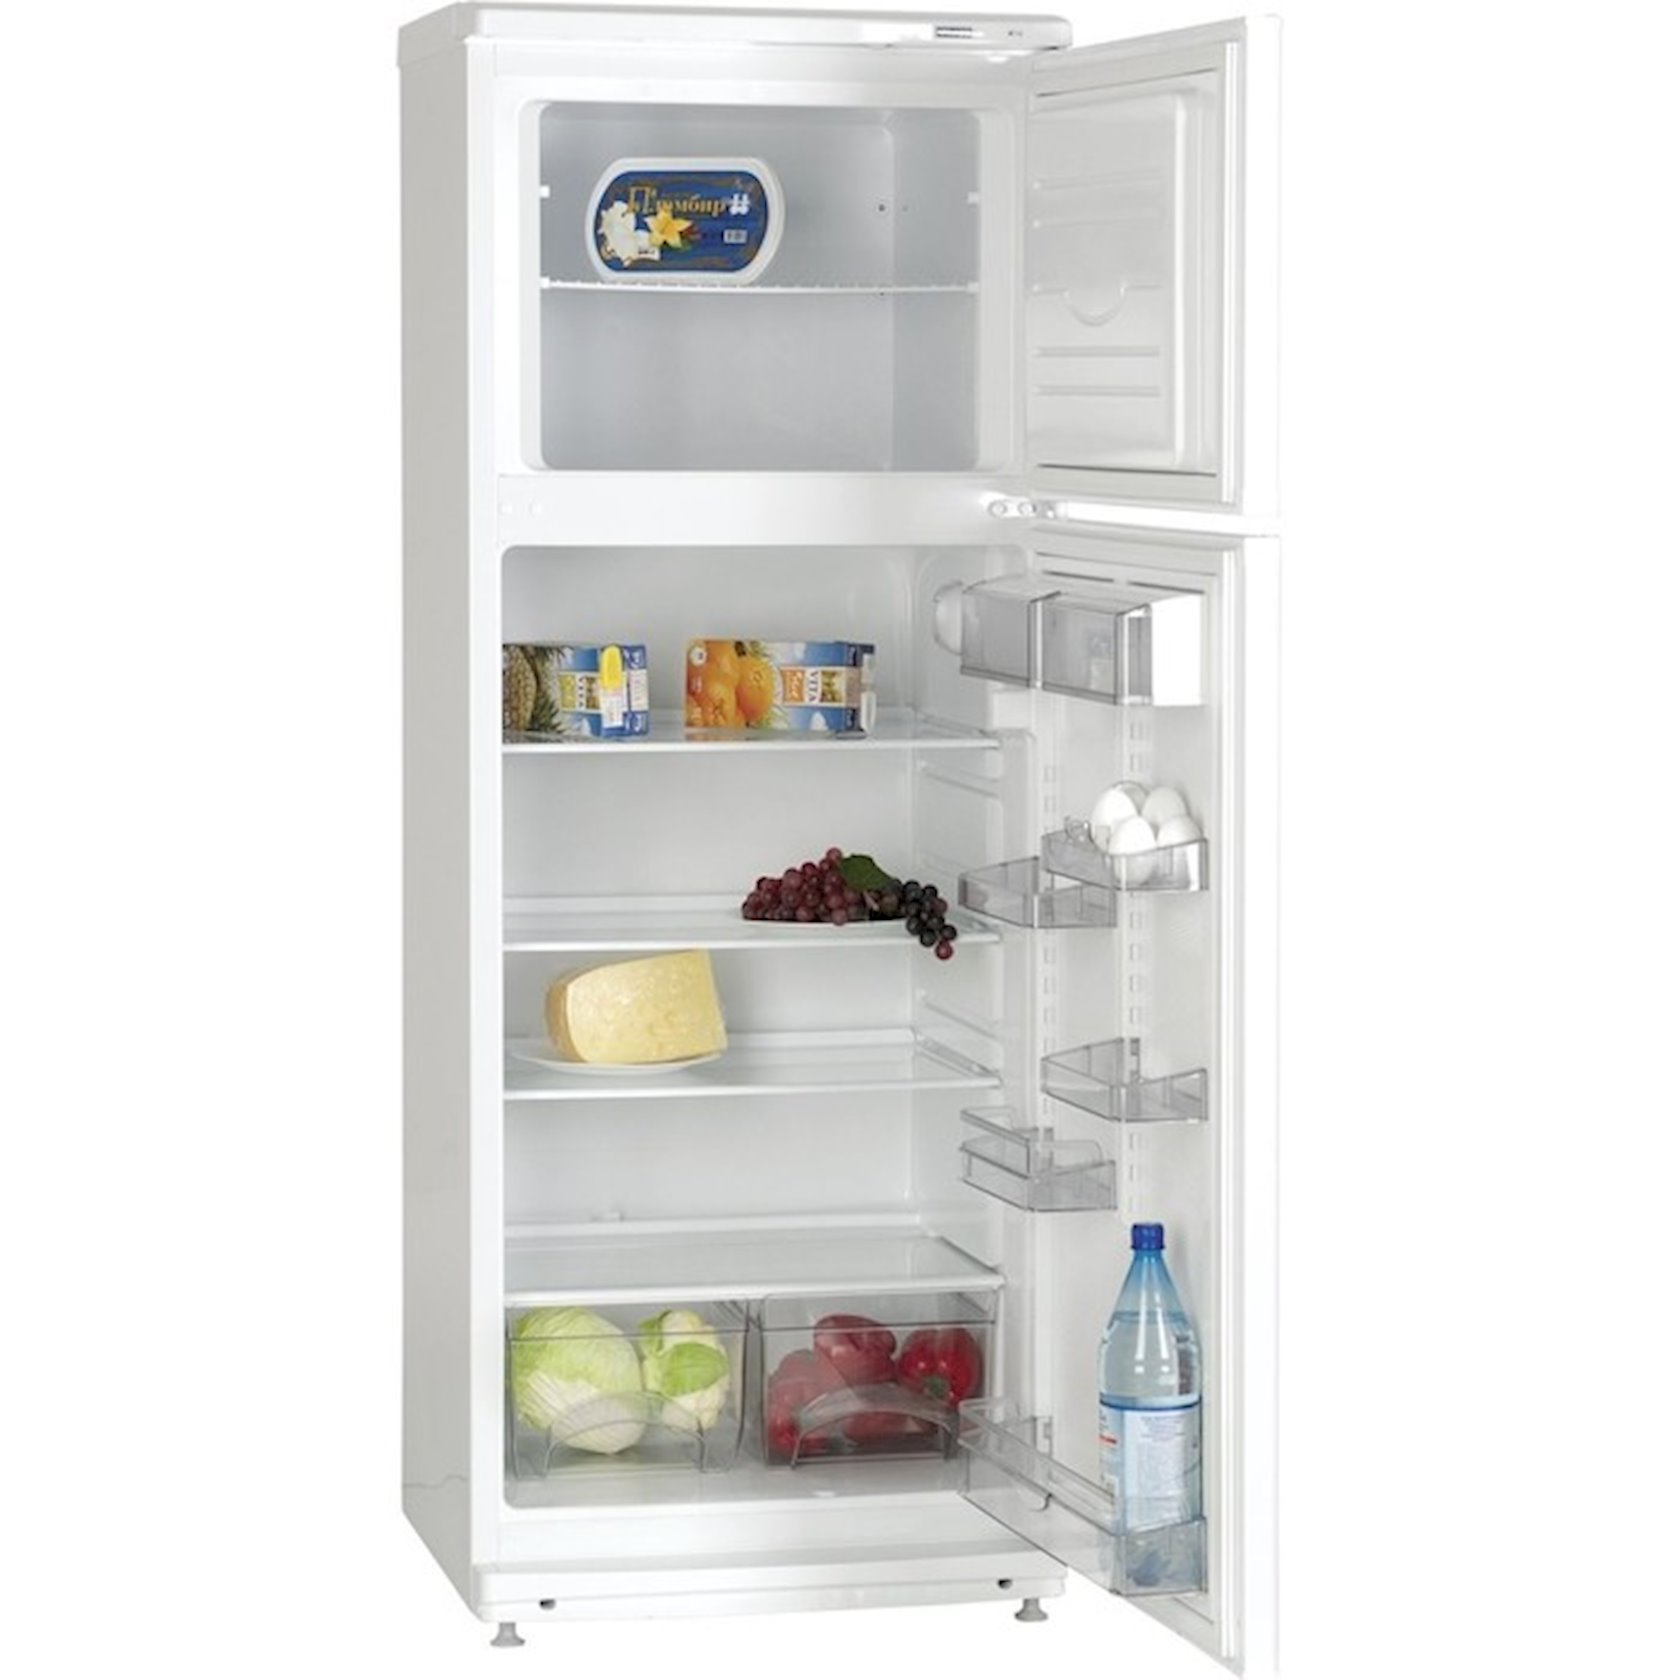 Хол атлант. Холодильник ATLANT МХМ 2835-90. Холодильник Атлант MXM-2835-90. Холодильник Атлант MXM-2835-90 двухкамерный белый. Холодильник Атлант MXM 2835.